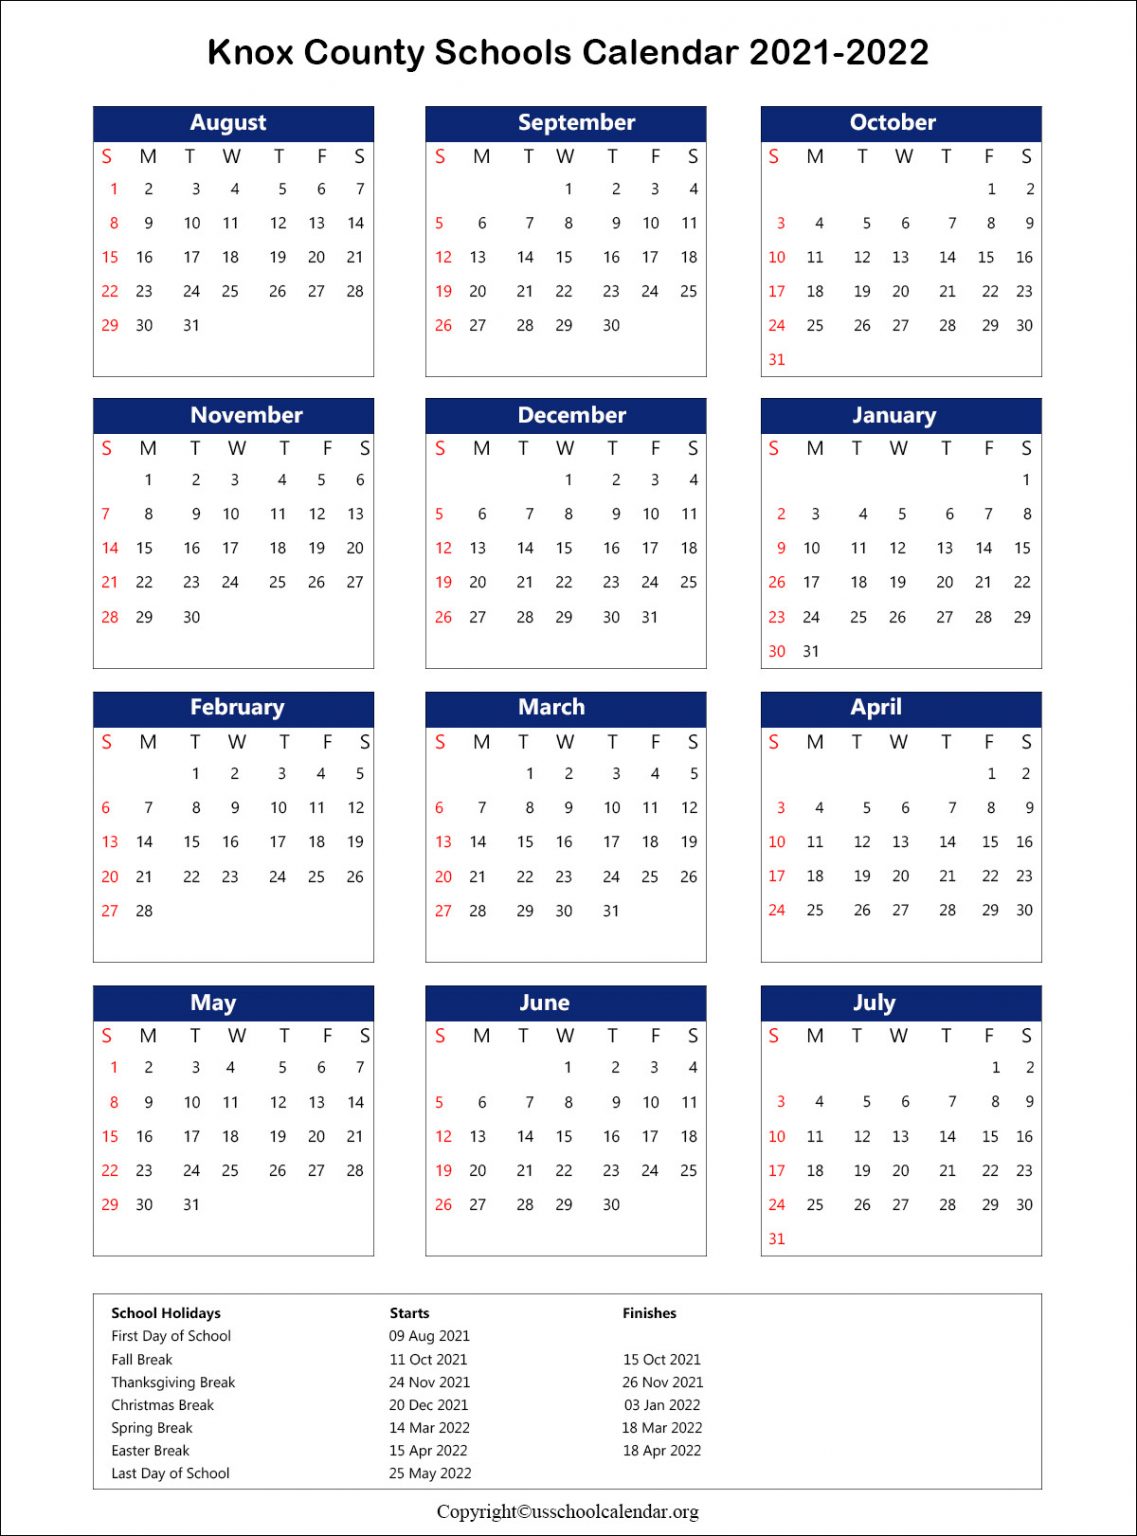 Knox County Schools Calendar with Holidays 2021 2022